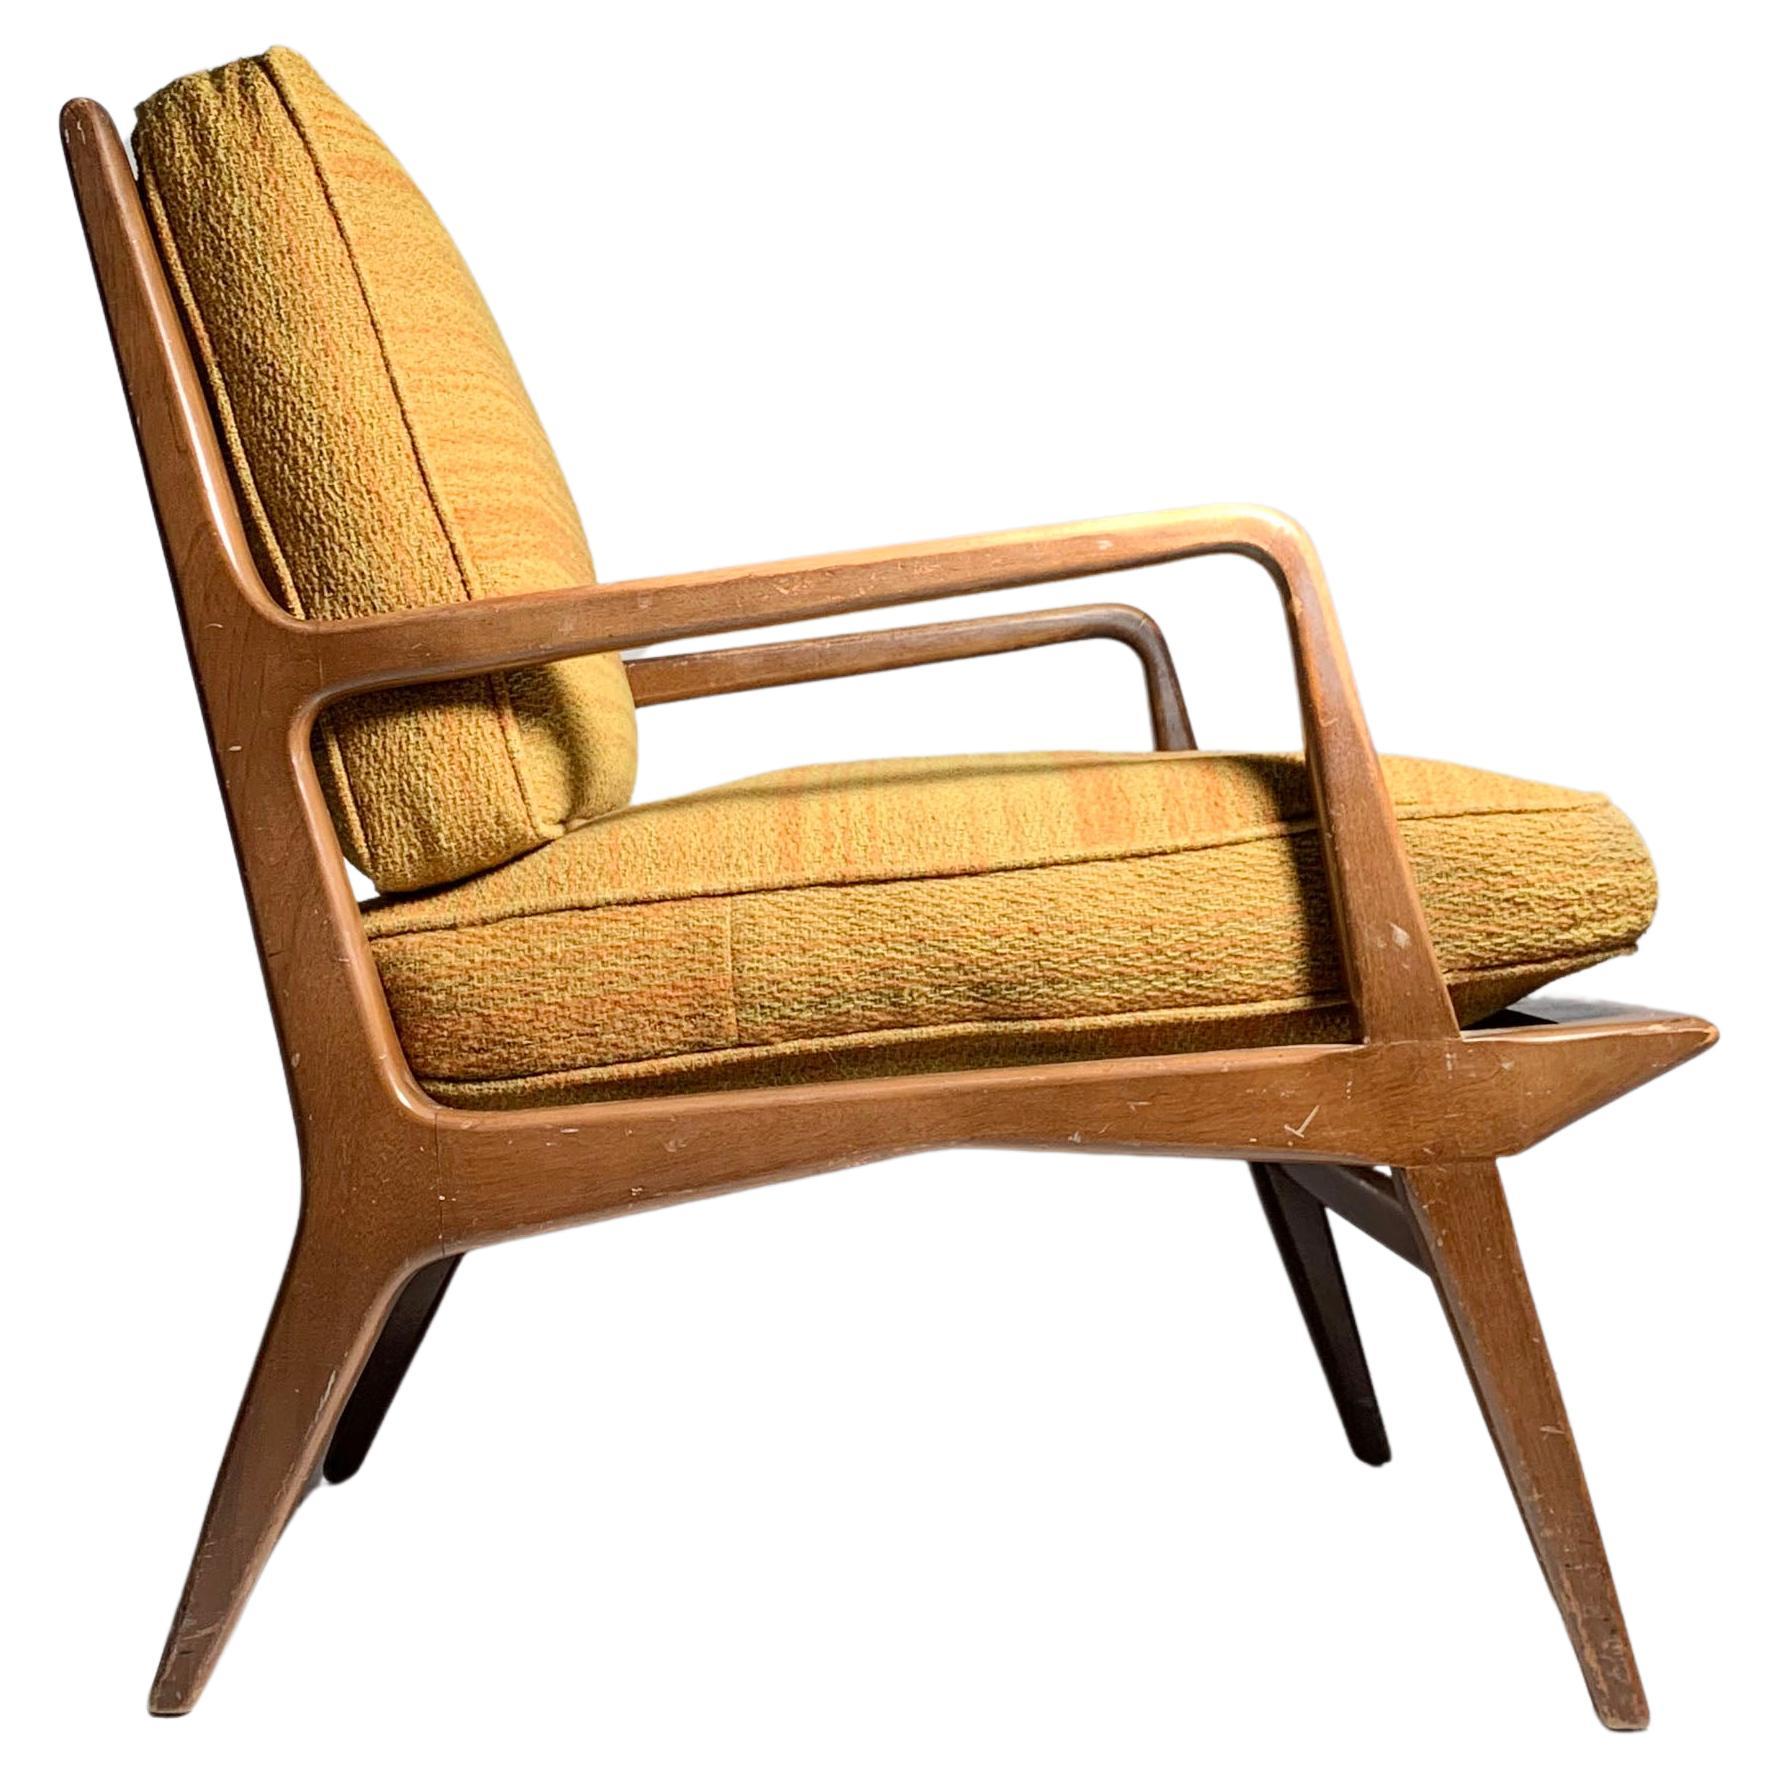  Vintage Lounge Chair design by Carlo di Carli